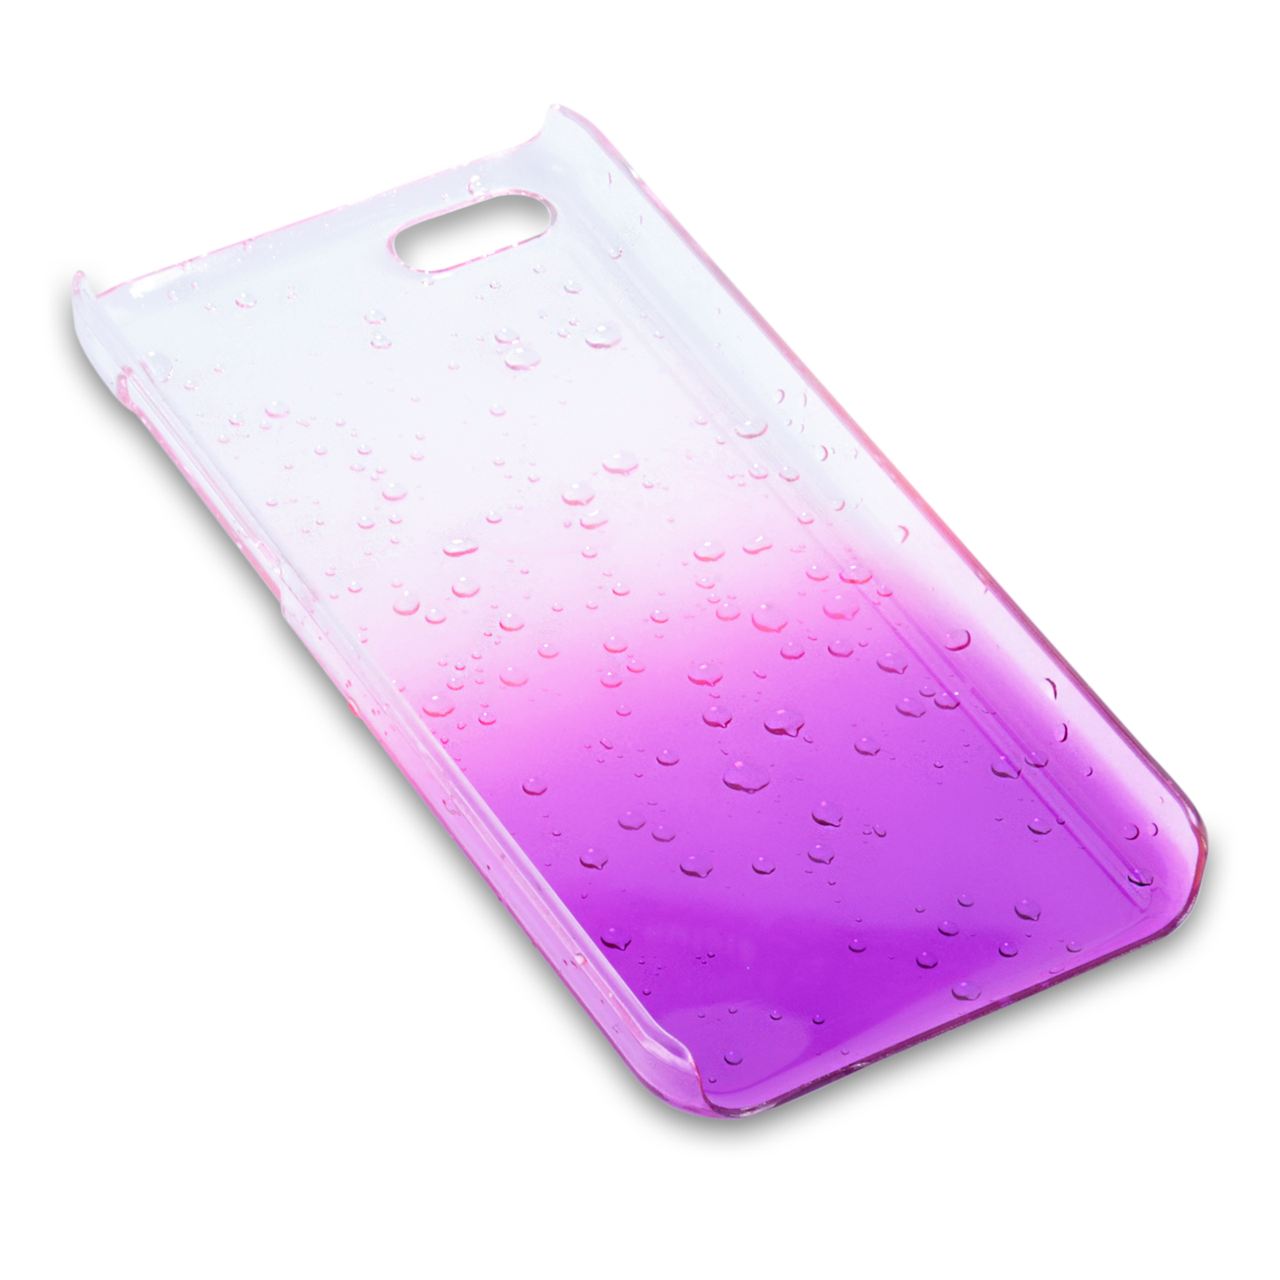 YouSave Accessories iPhone 5C Raindrop Hard Case - Purple